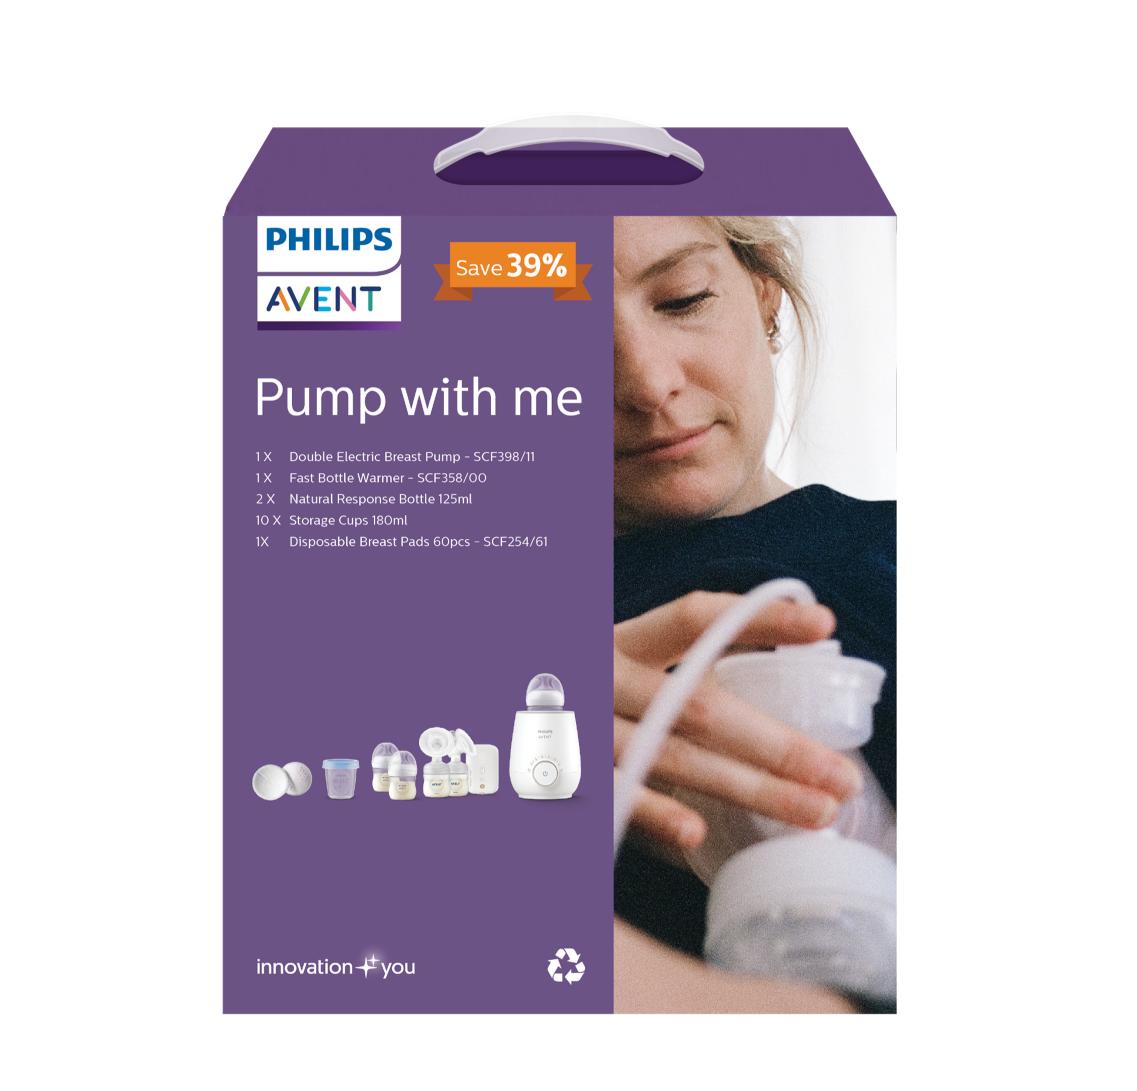 Philips Avent Pump With Me Bundle - Double Electric Breast Pump + Fast Bottle Warmer + Disposable Breast Pads (60pcs) + 125ml Natural Response Bottle (2pcs Single Pack) + Storage 180ml (10pcs)